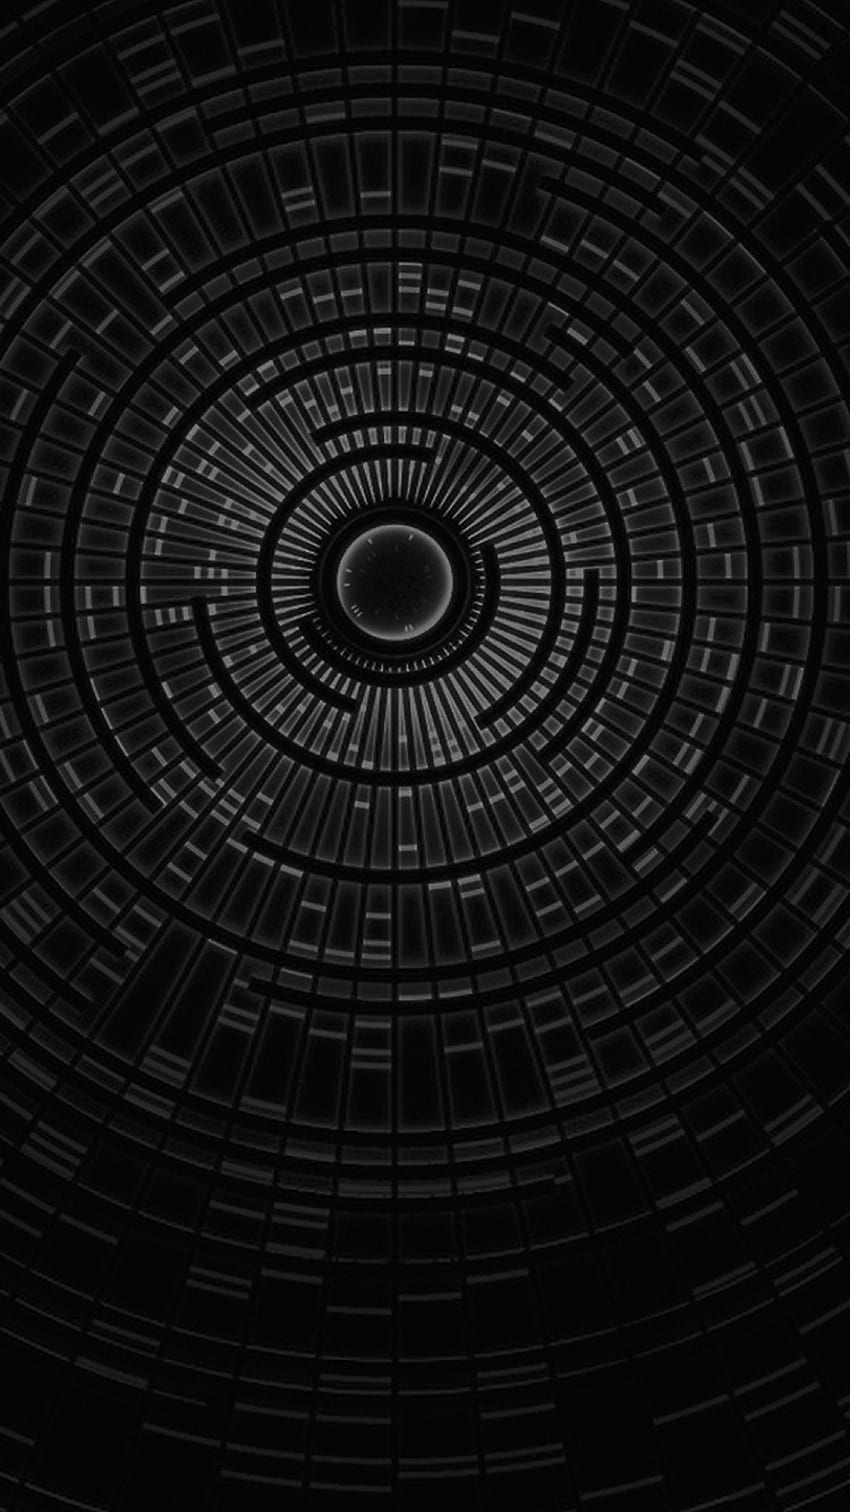 Círculo agujero oscuro Bw patrón abstracto, círculo negro 6 fondo de pantalla del teléfono